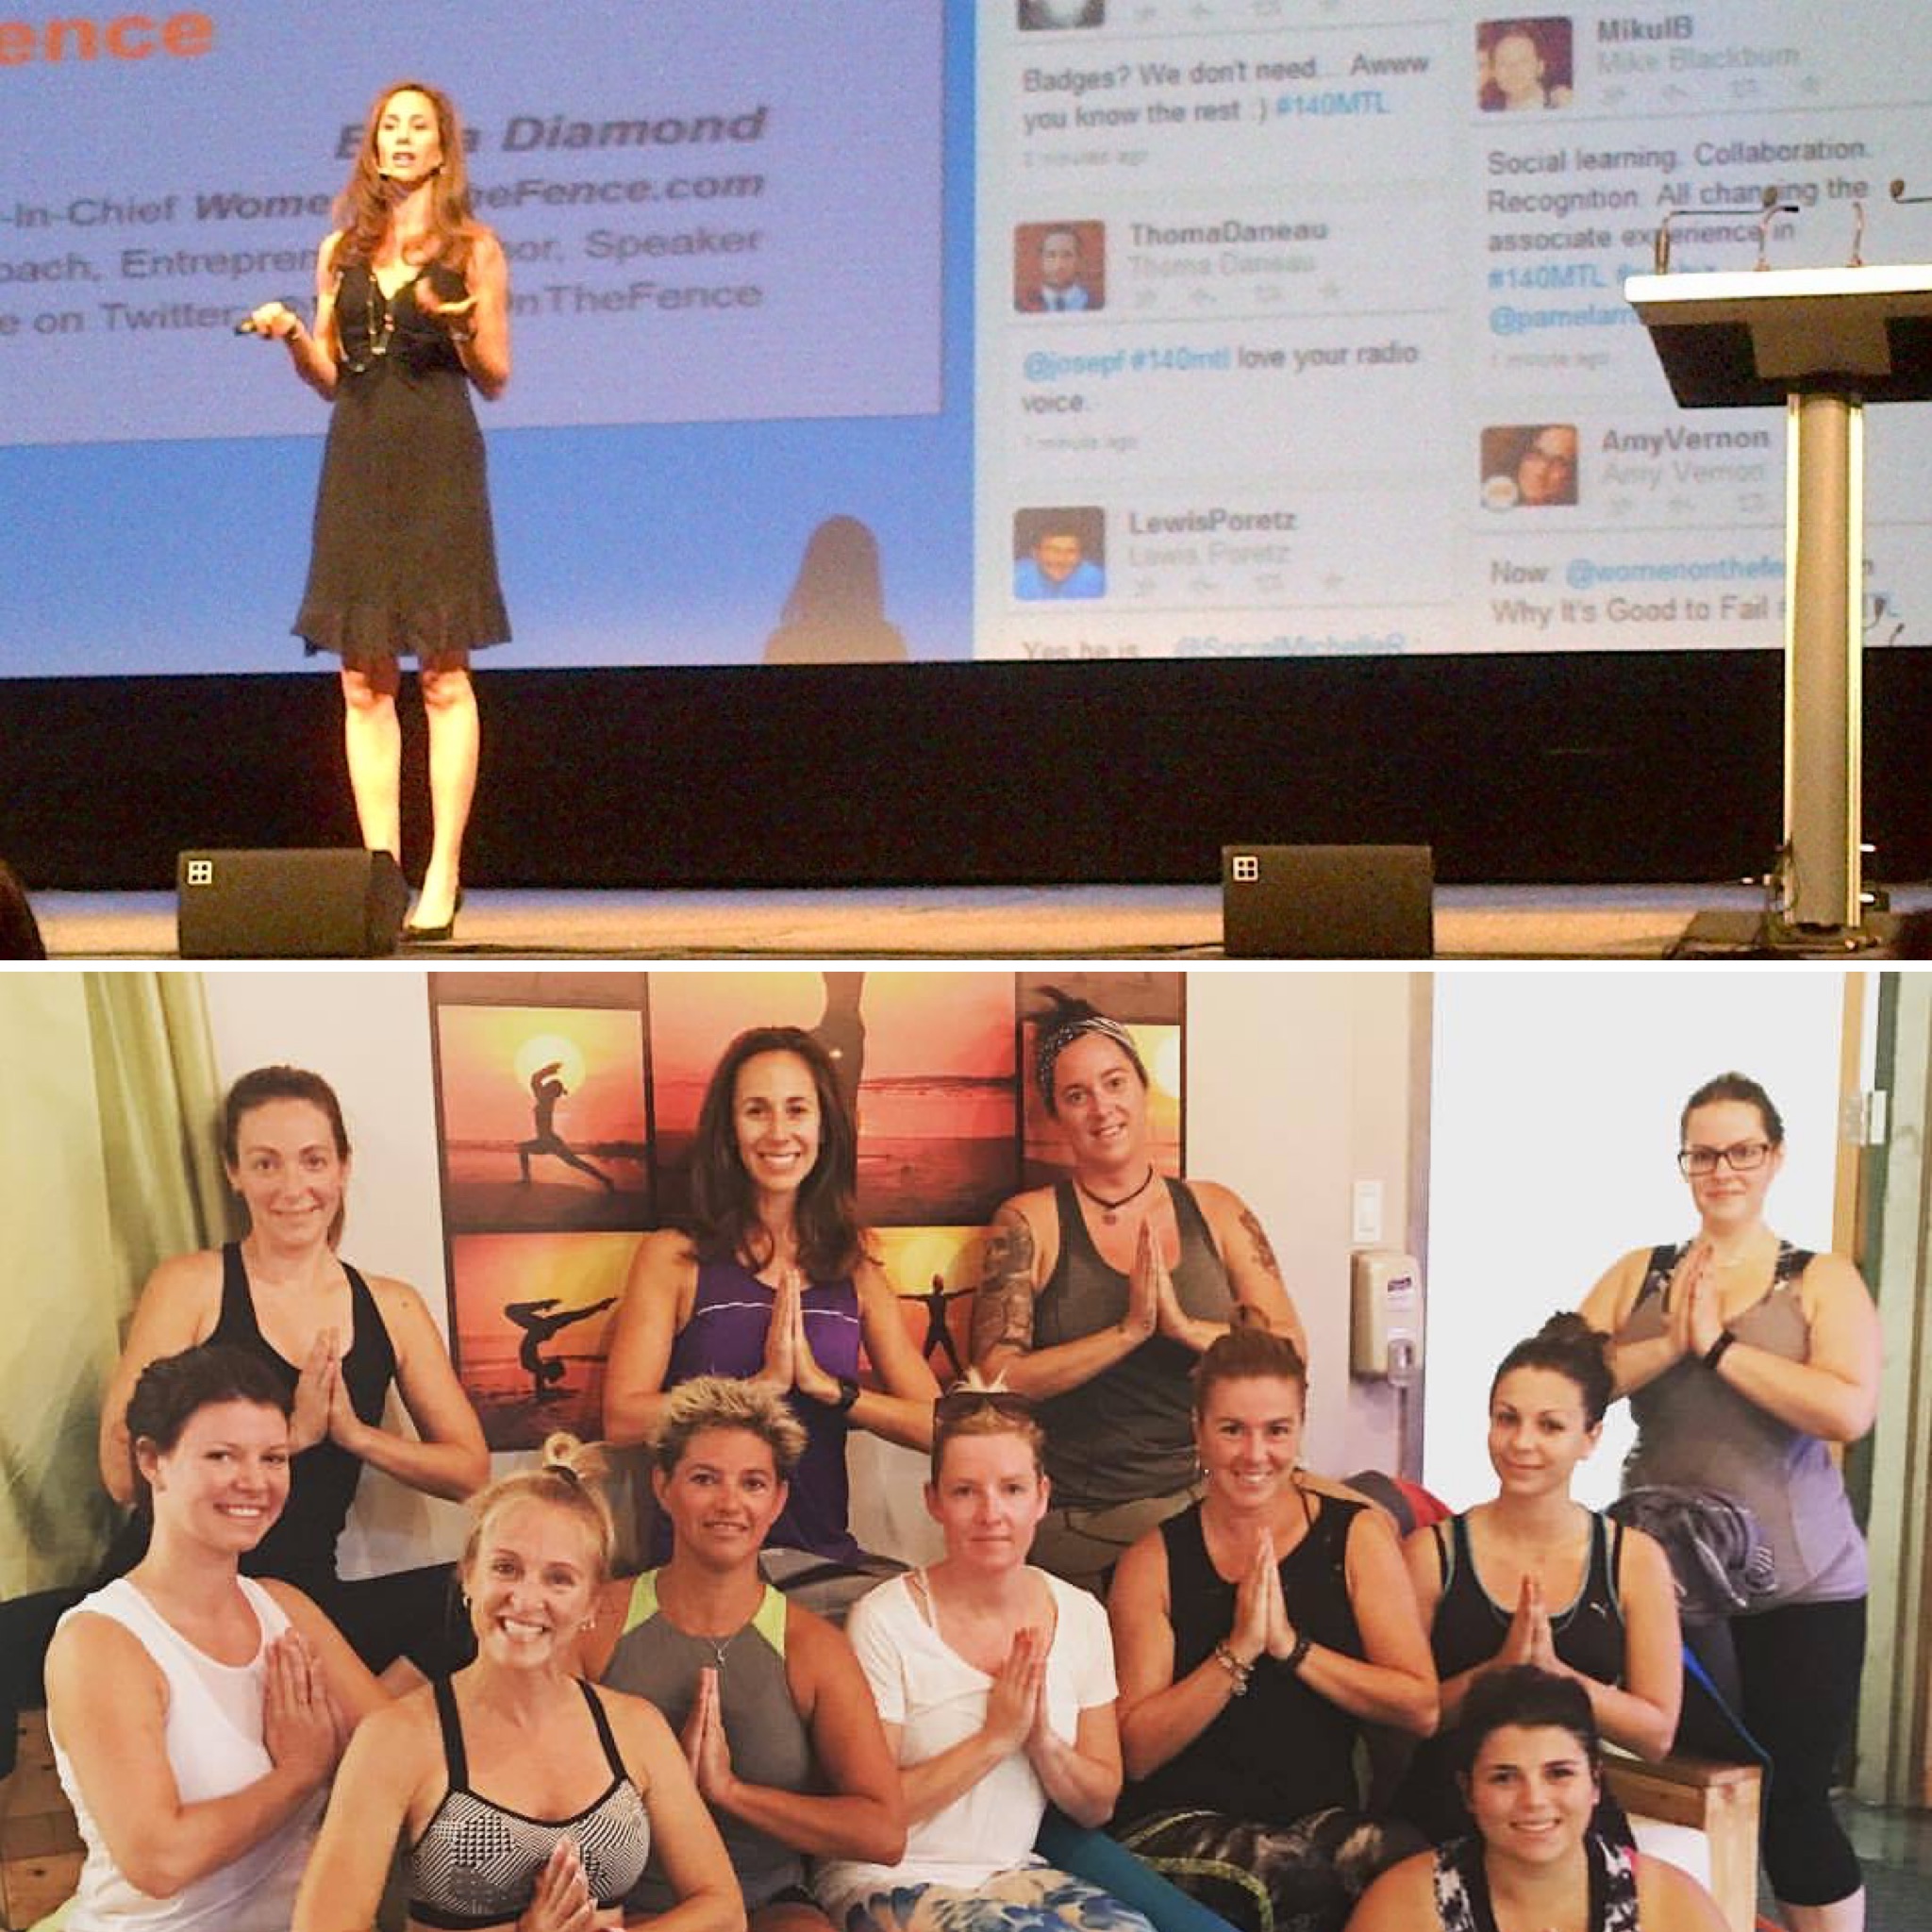 6 Yoga Poses for Stress Release - Erica Diamond